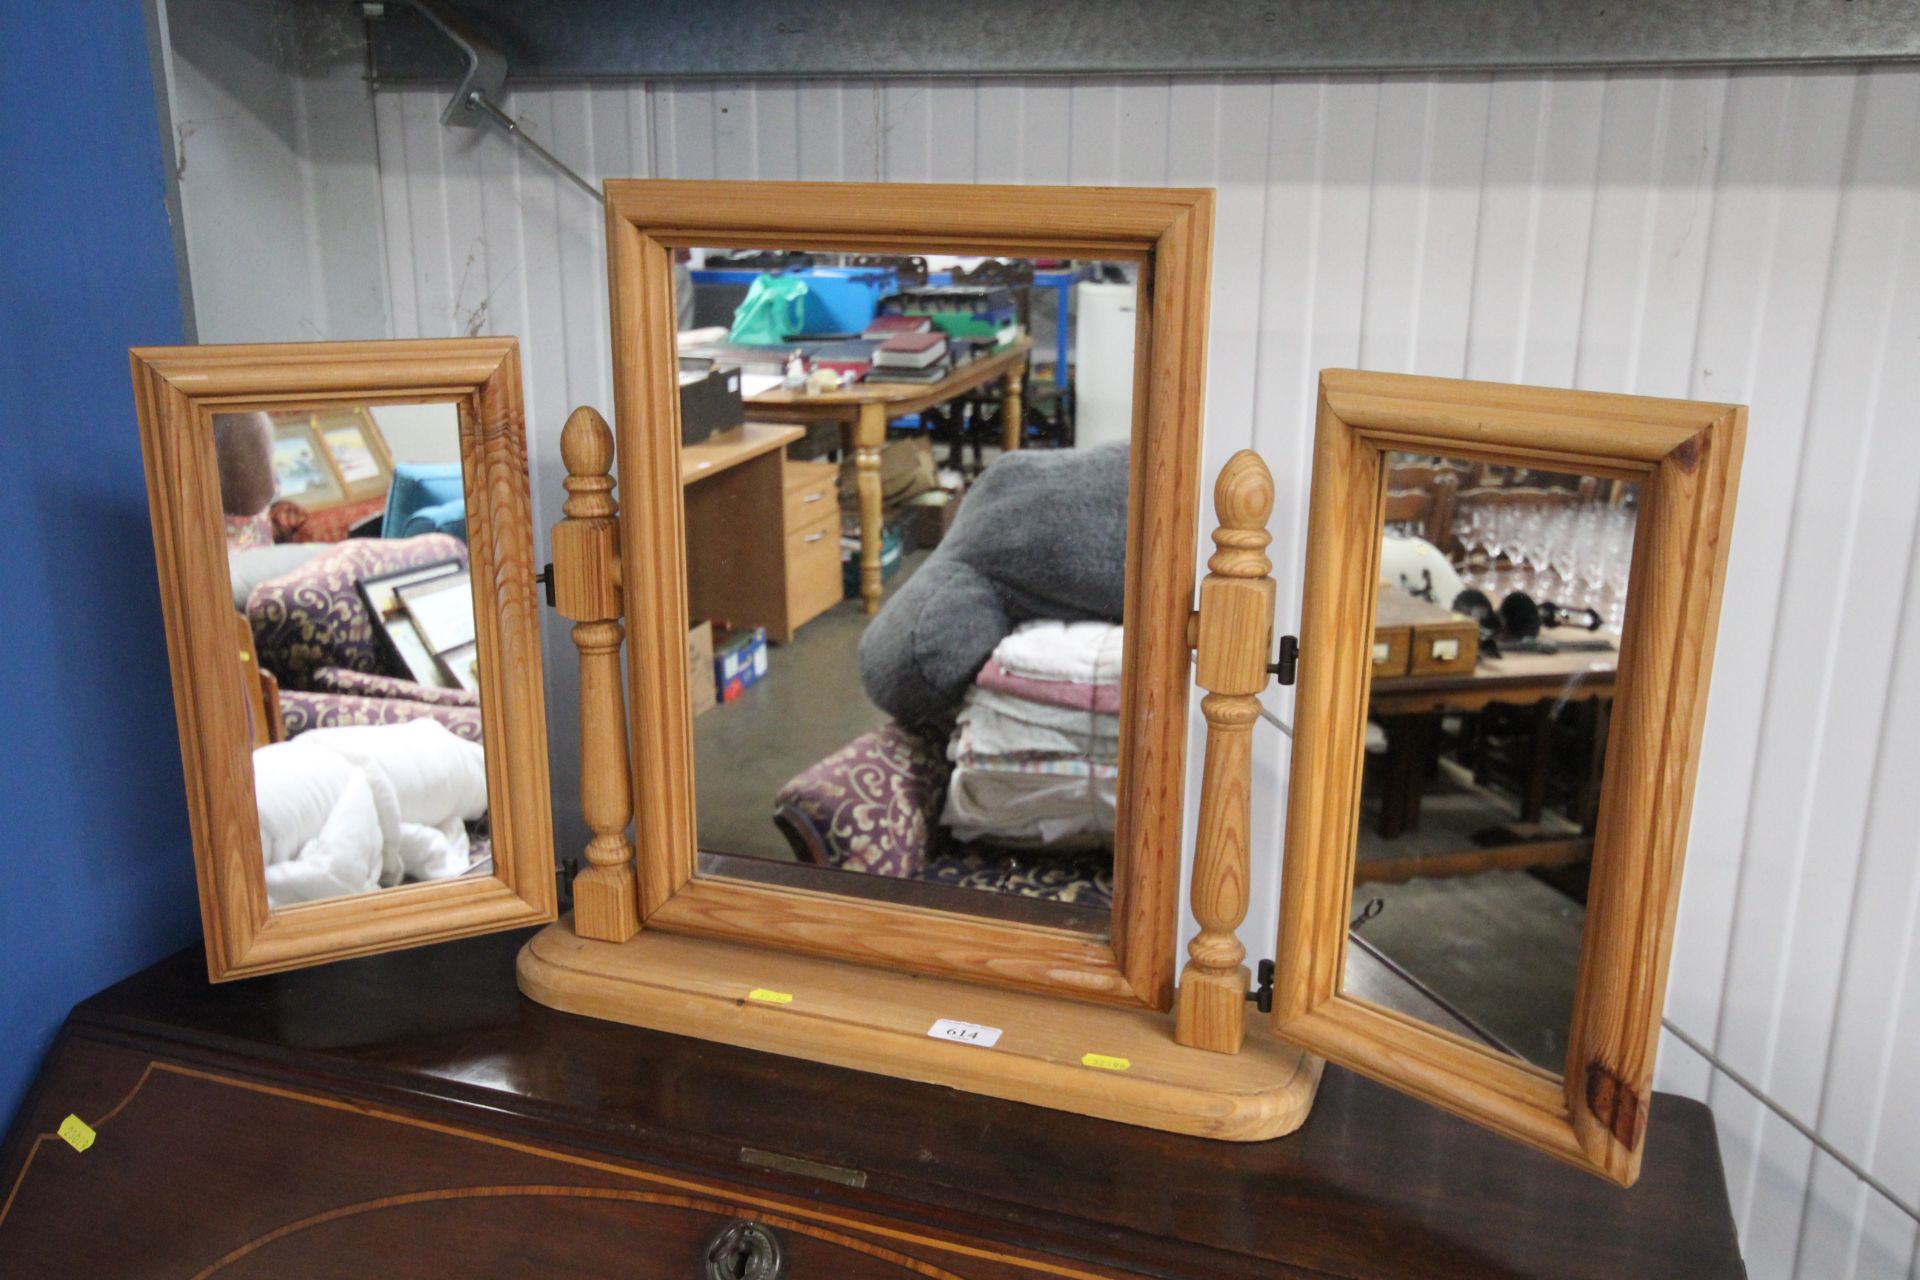 A pine triptych mirror